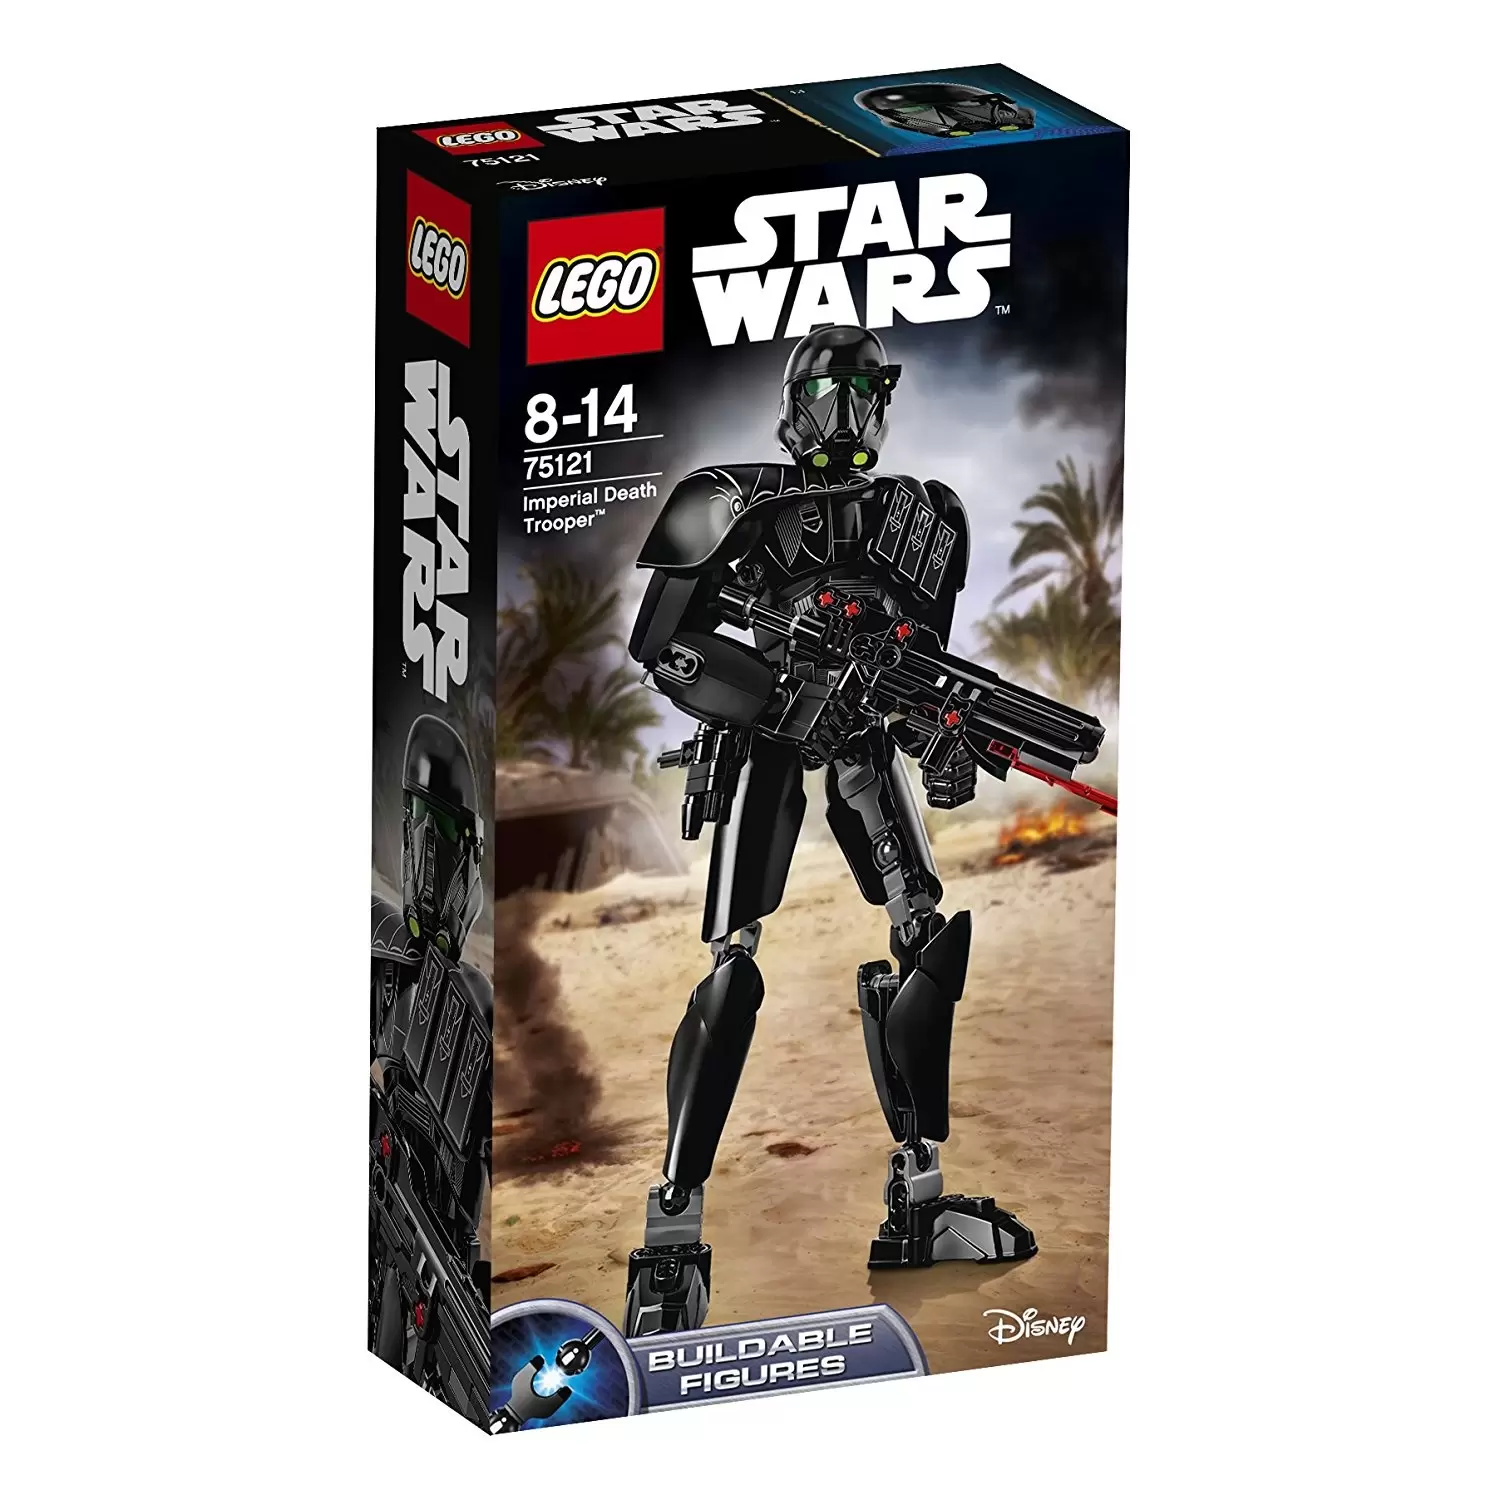 LEGO Star Wars - Imperial Death Trooper